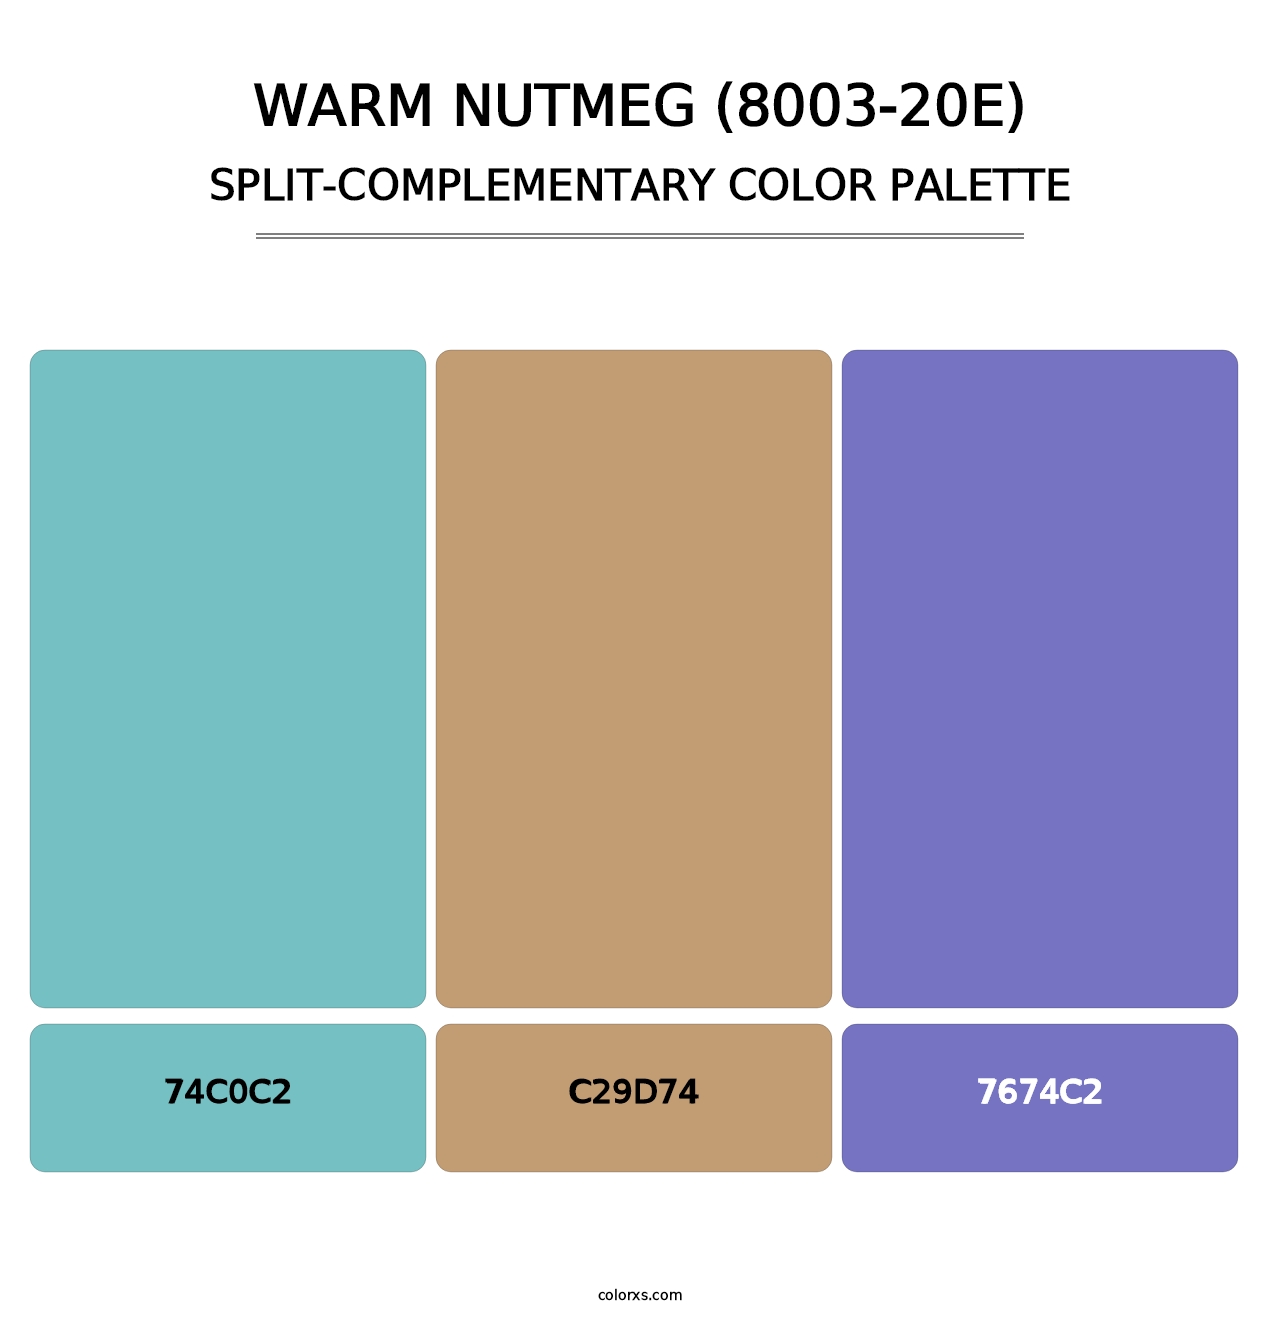 Warm Nutmeg (8003-20E) - Split-Complementary Color Palette